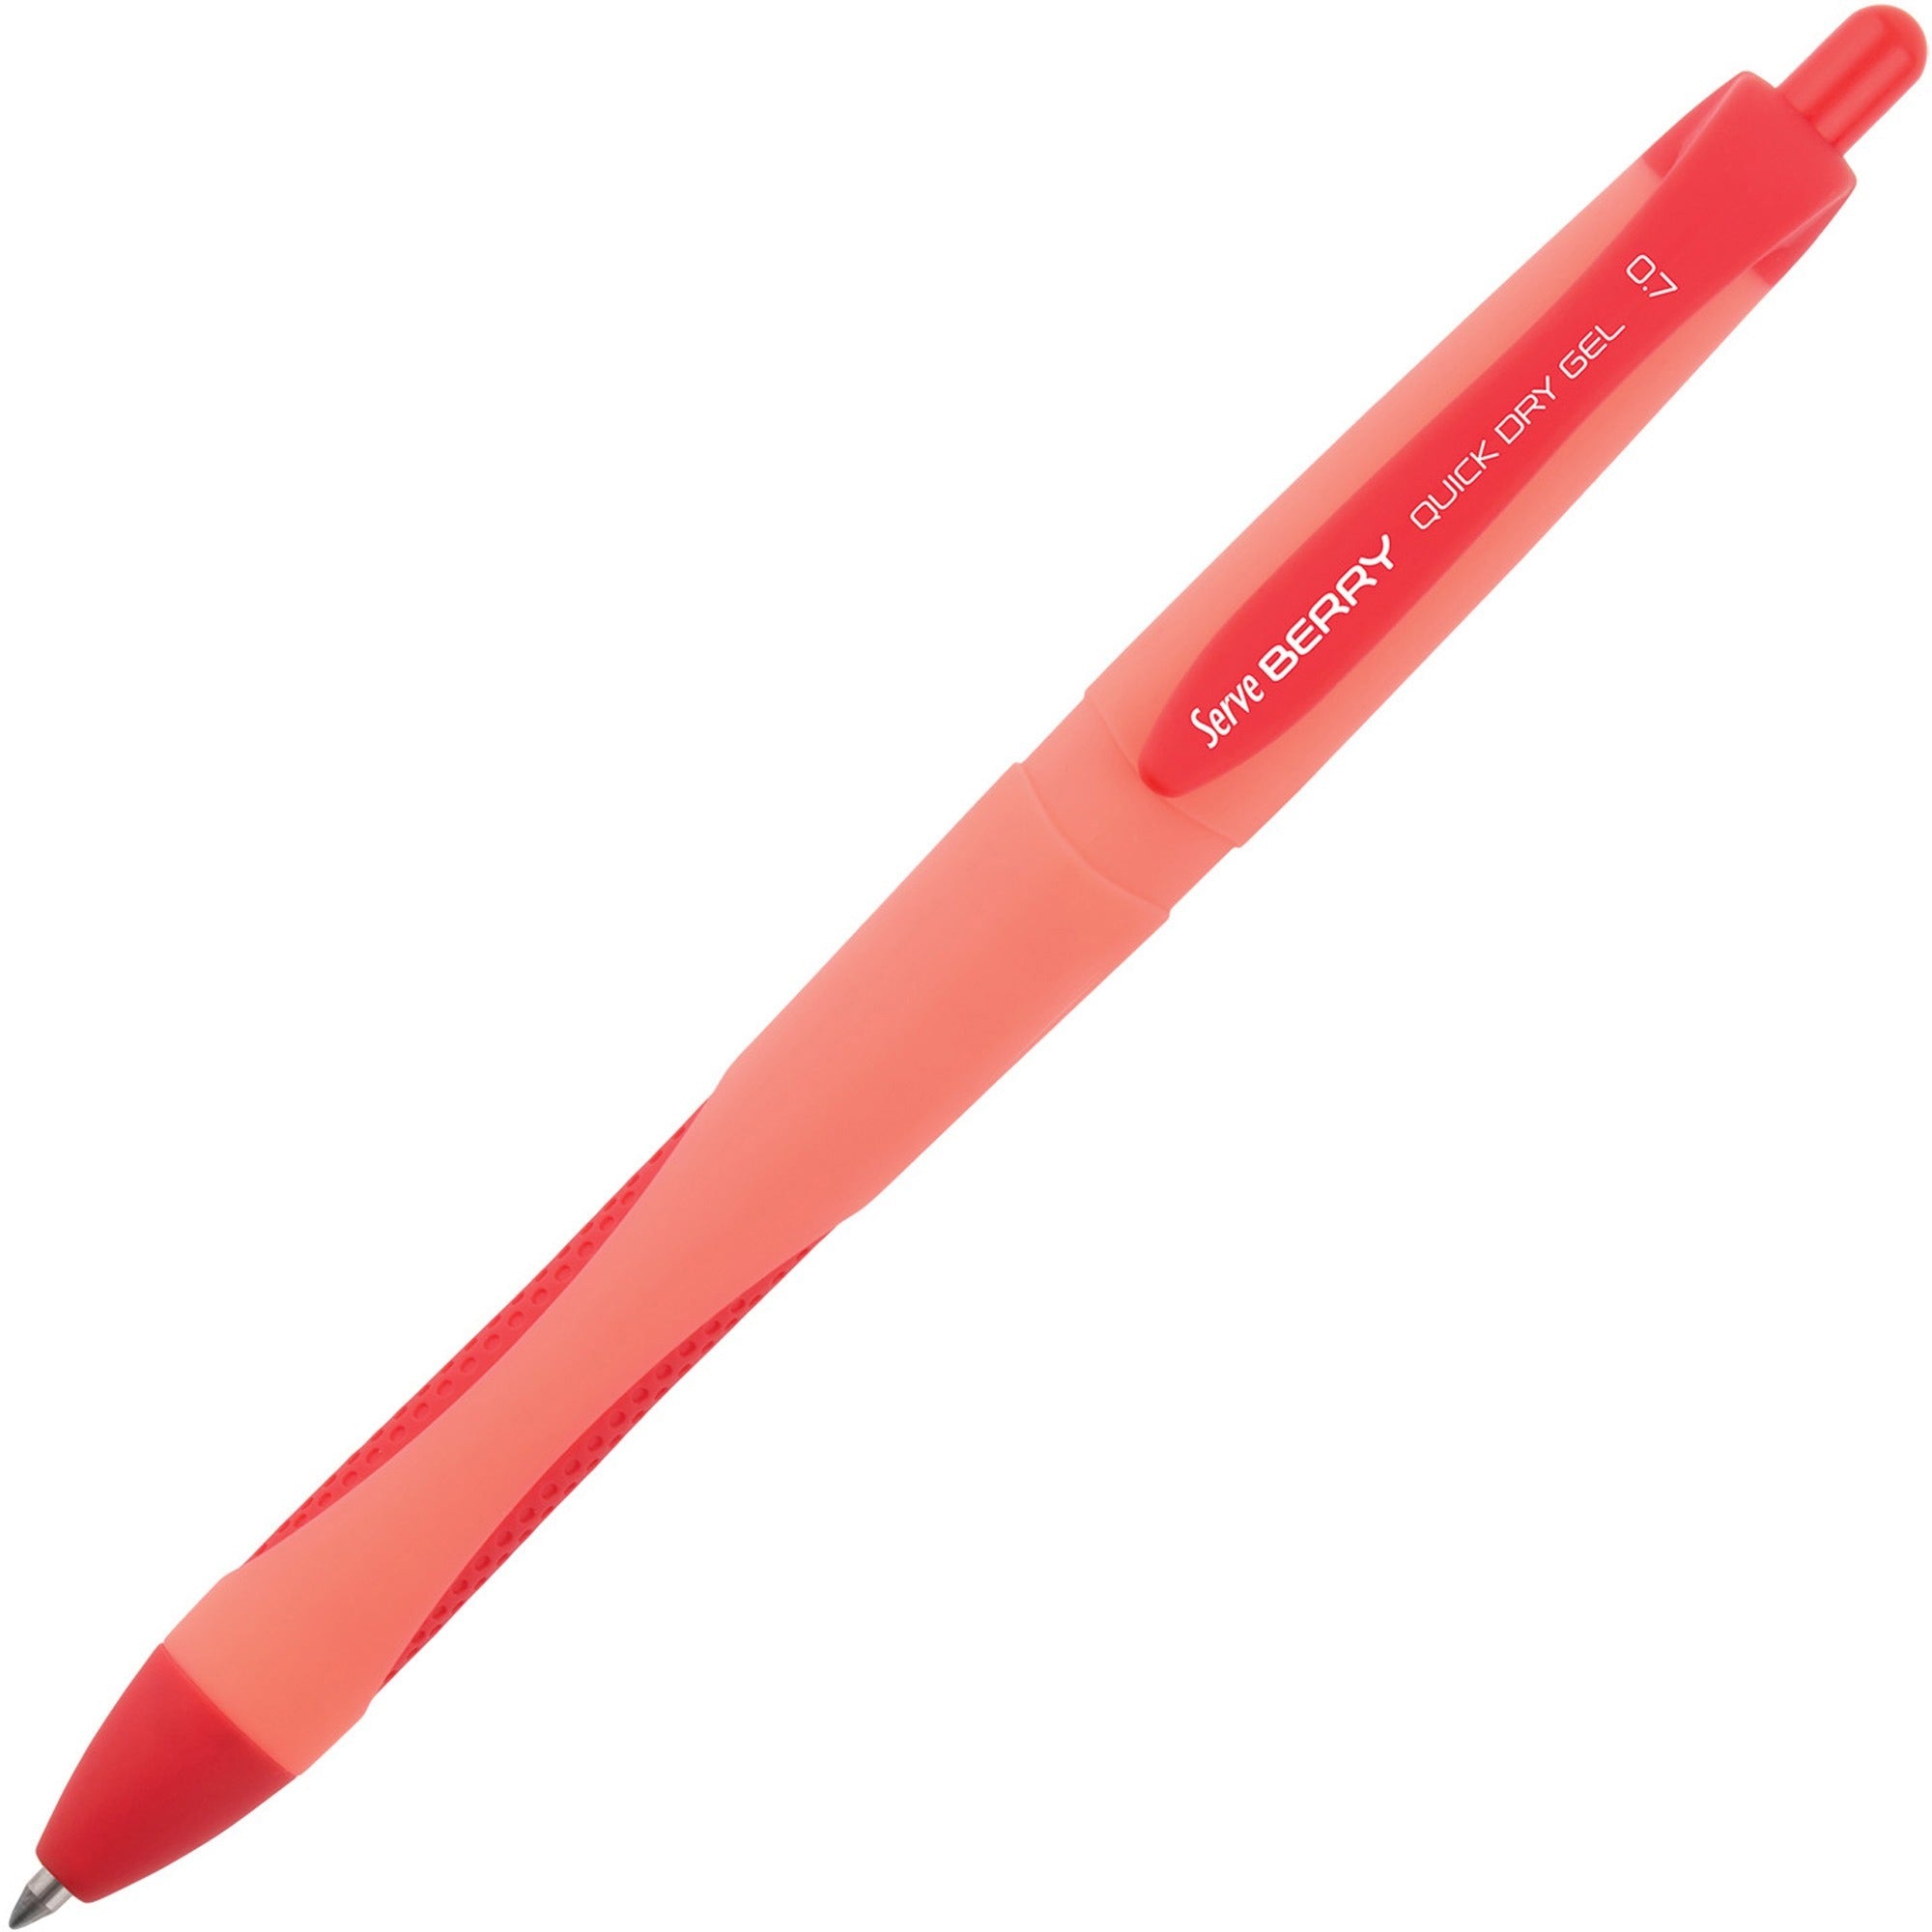 serve-berry-quick-dry-gel-ink-pen-medium-pen-point-07-mm-pen-point-size-retractable-red-gel-based-ink-red-barrel-1-each_srvbrgel0712krm - 1